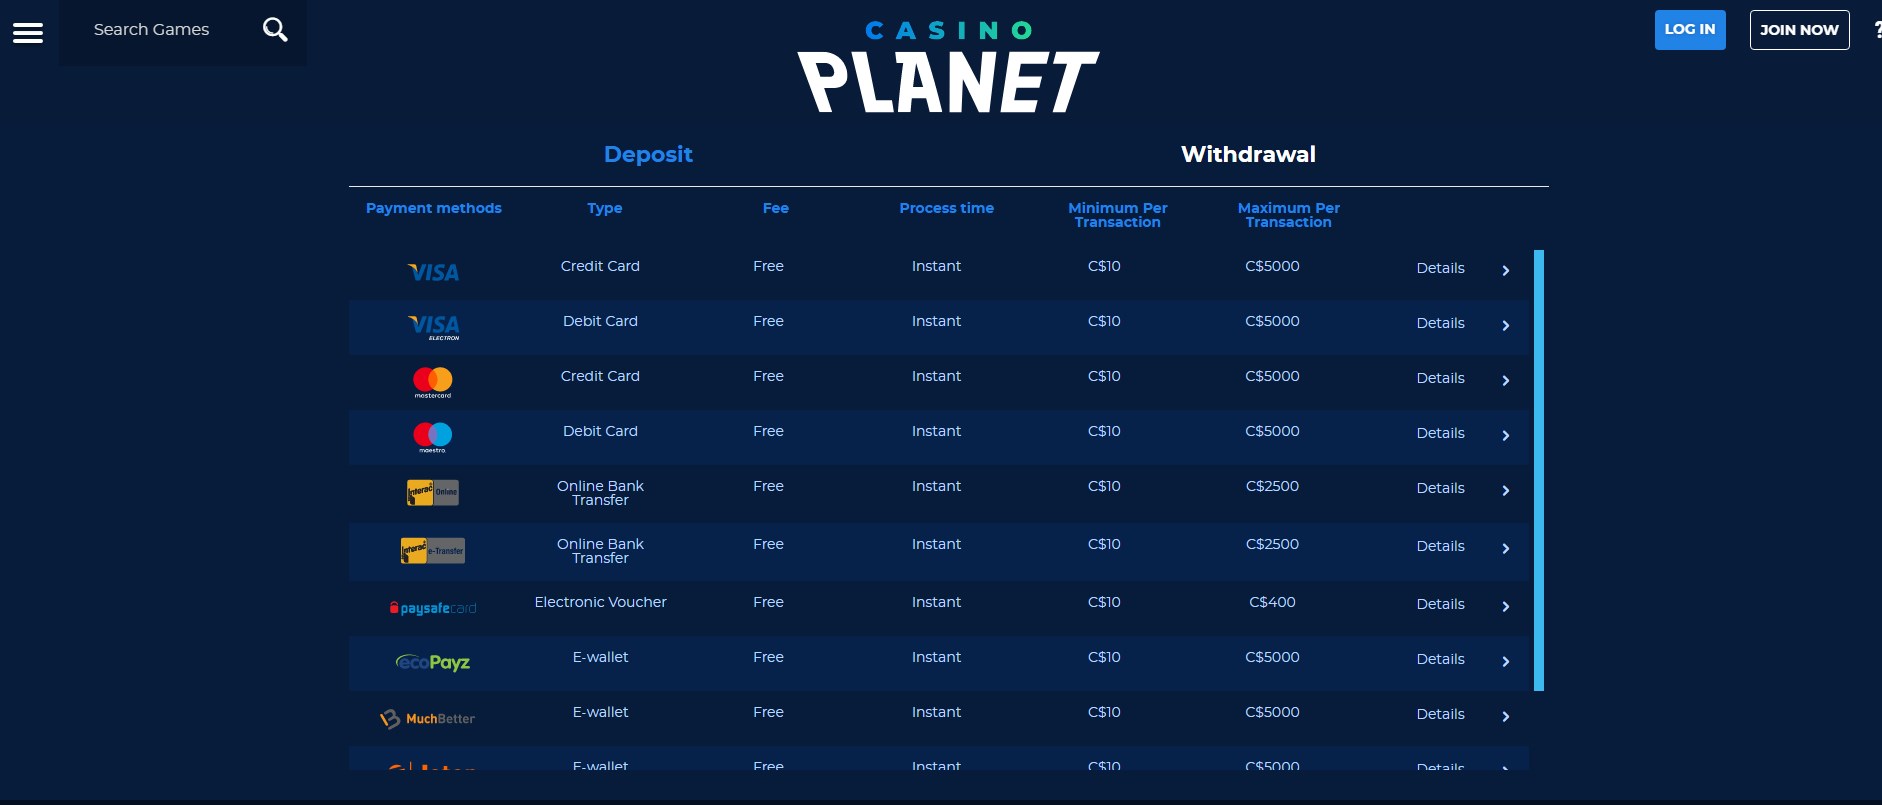 Casino Planet Payment Methods